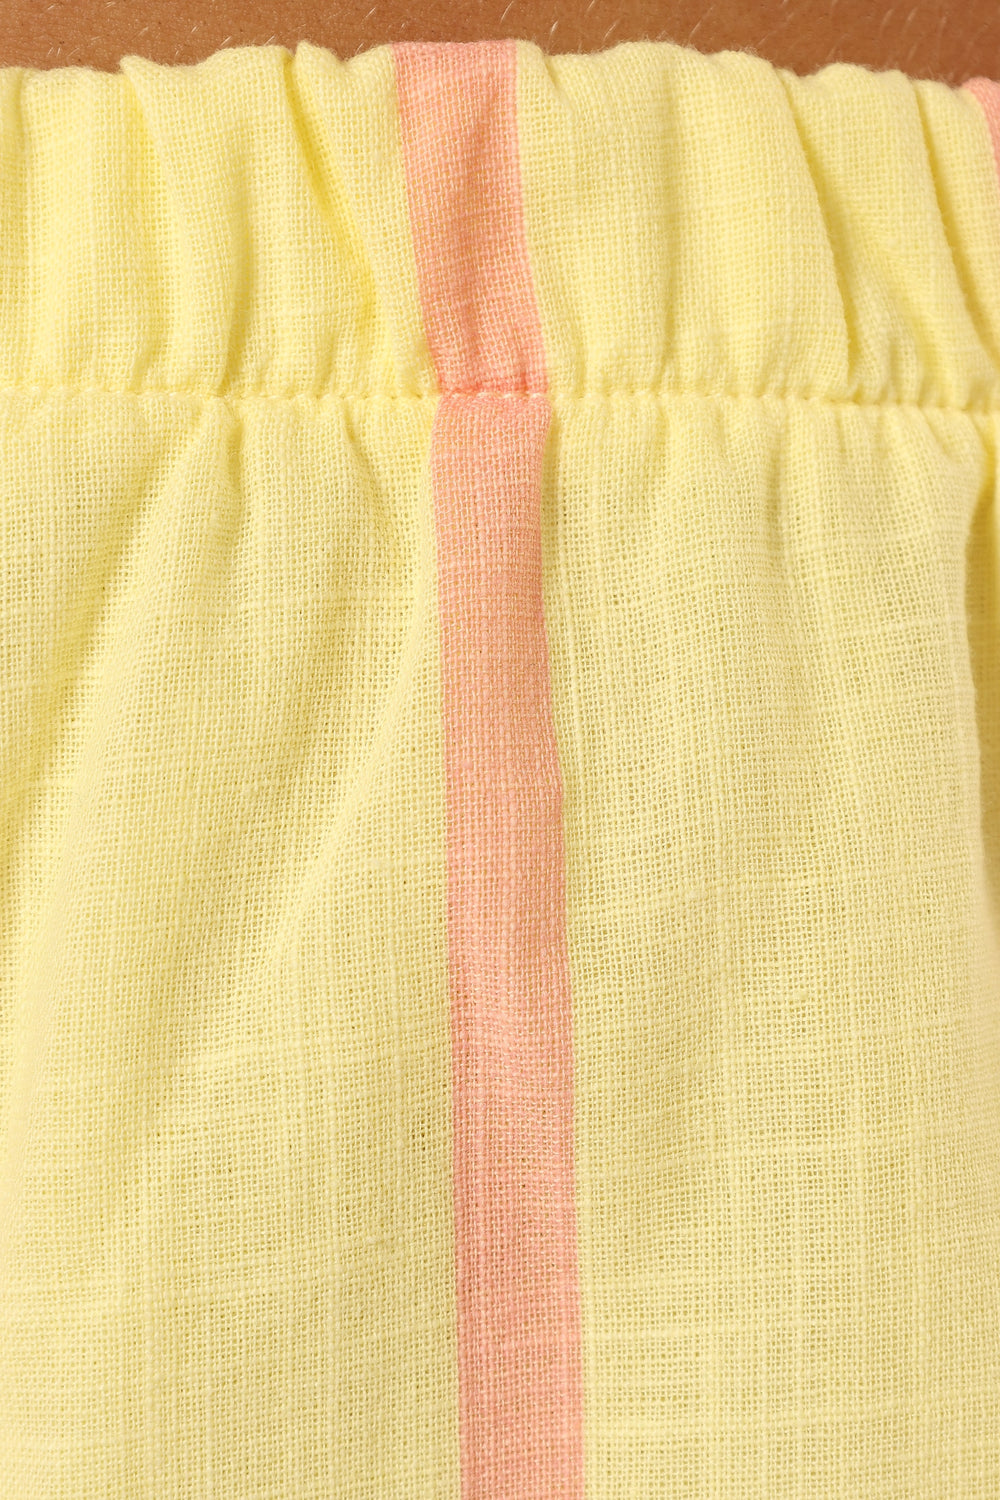 BOTTOMS @Lee Shorts - Yellow Pink Stripe